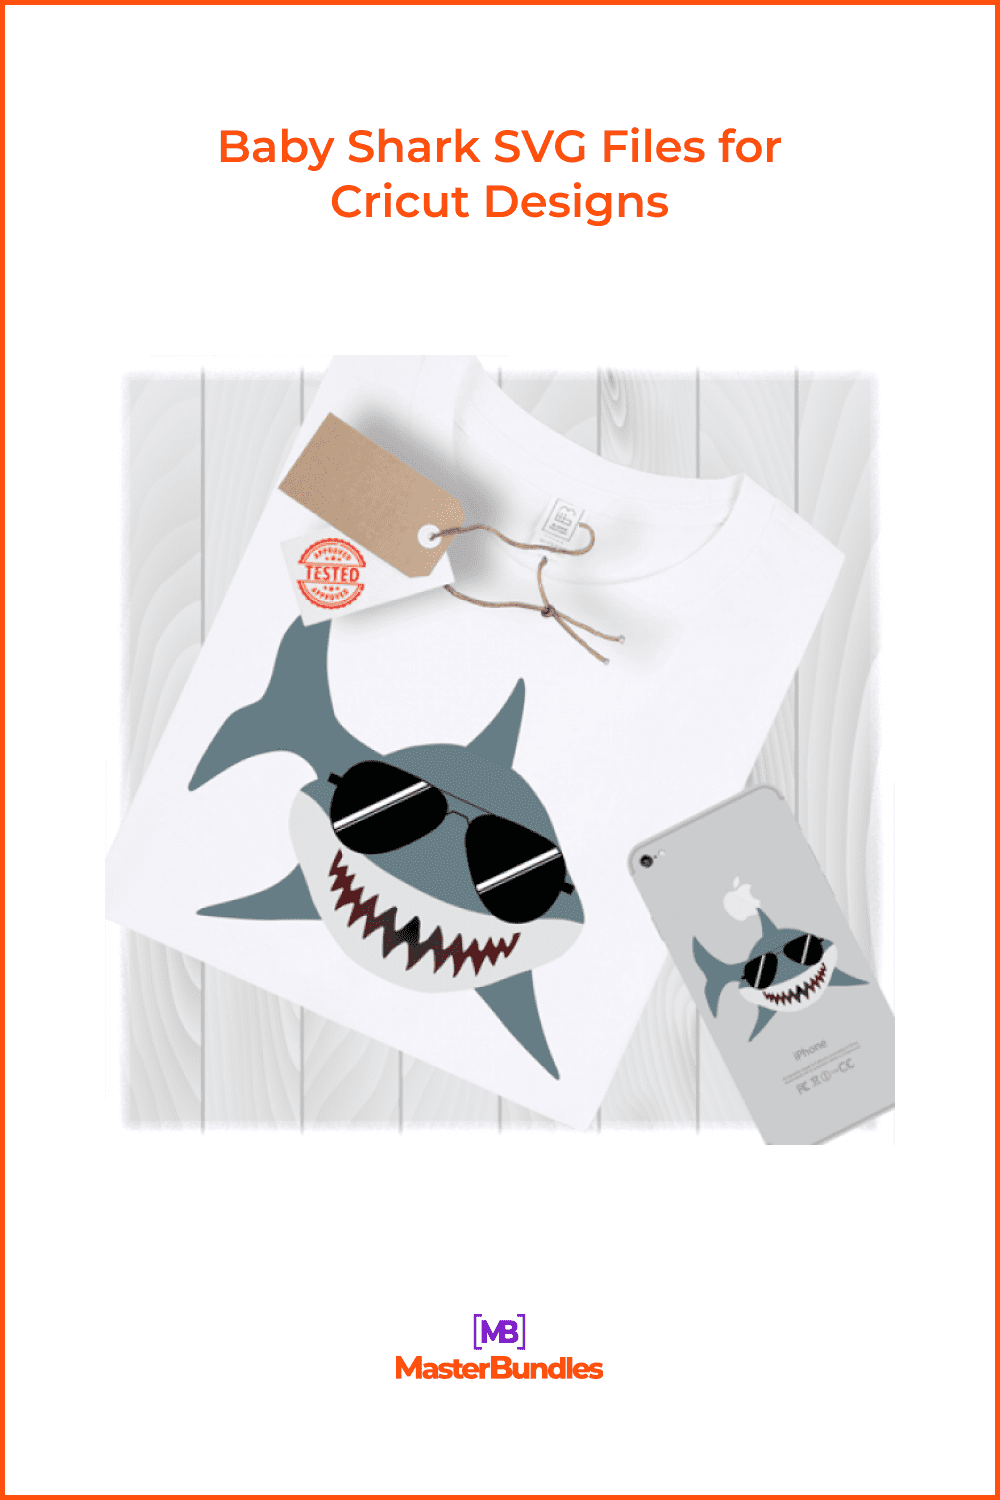 Baby Shark SVG Files for Cricut Designs.